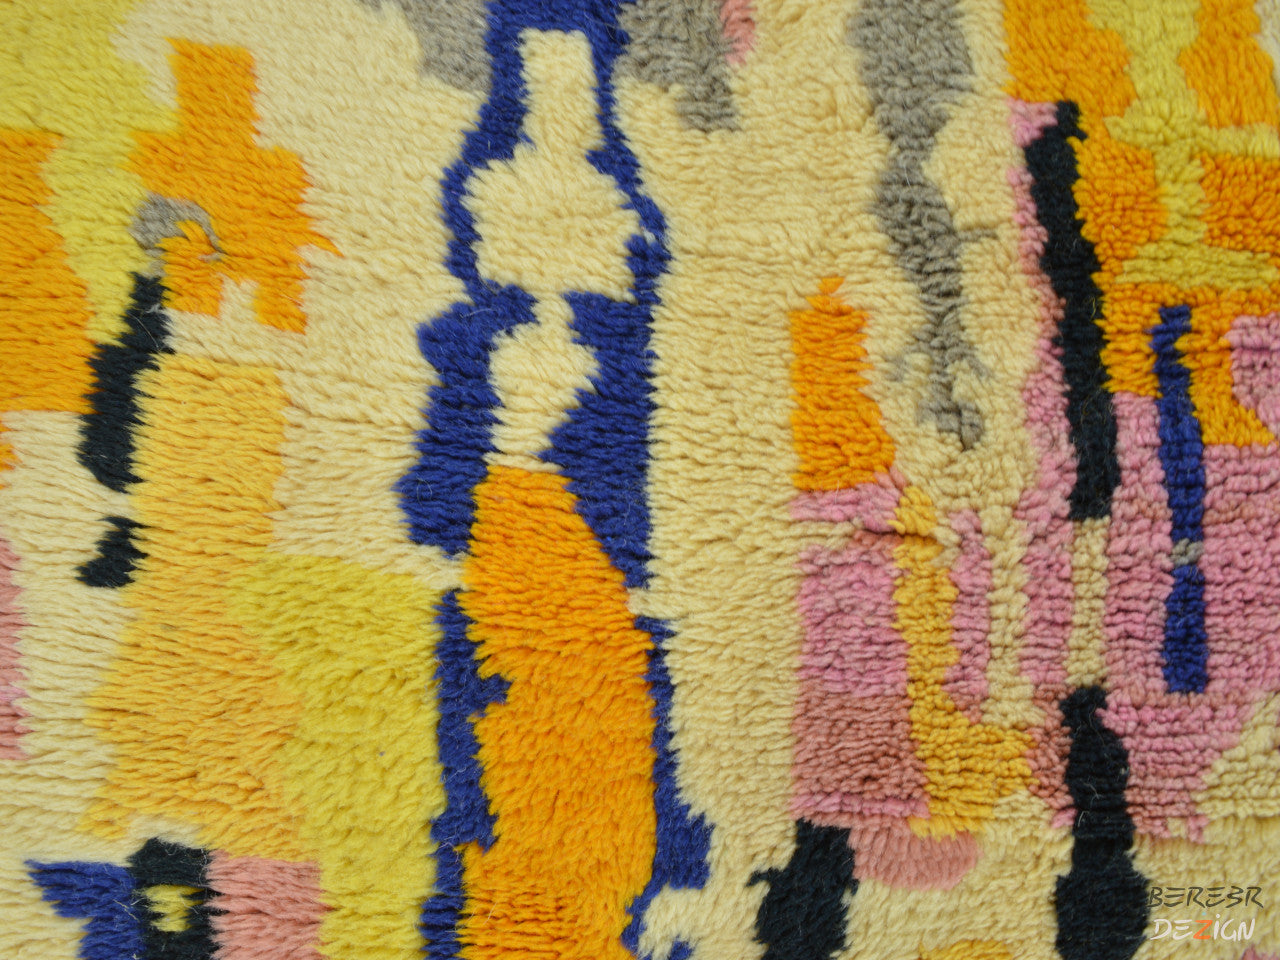 Abstract Colorful Moroccan Berber carpet A_1015 BerberDezign